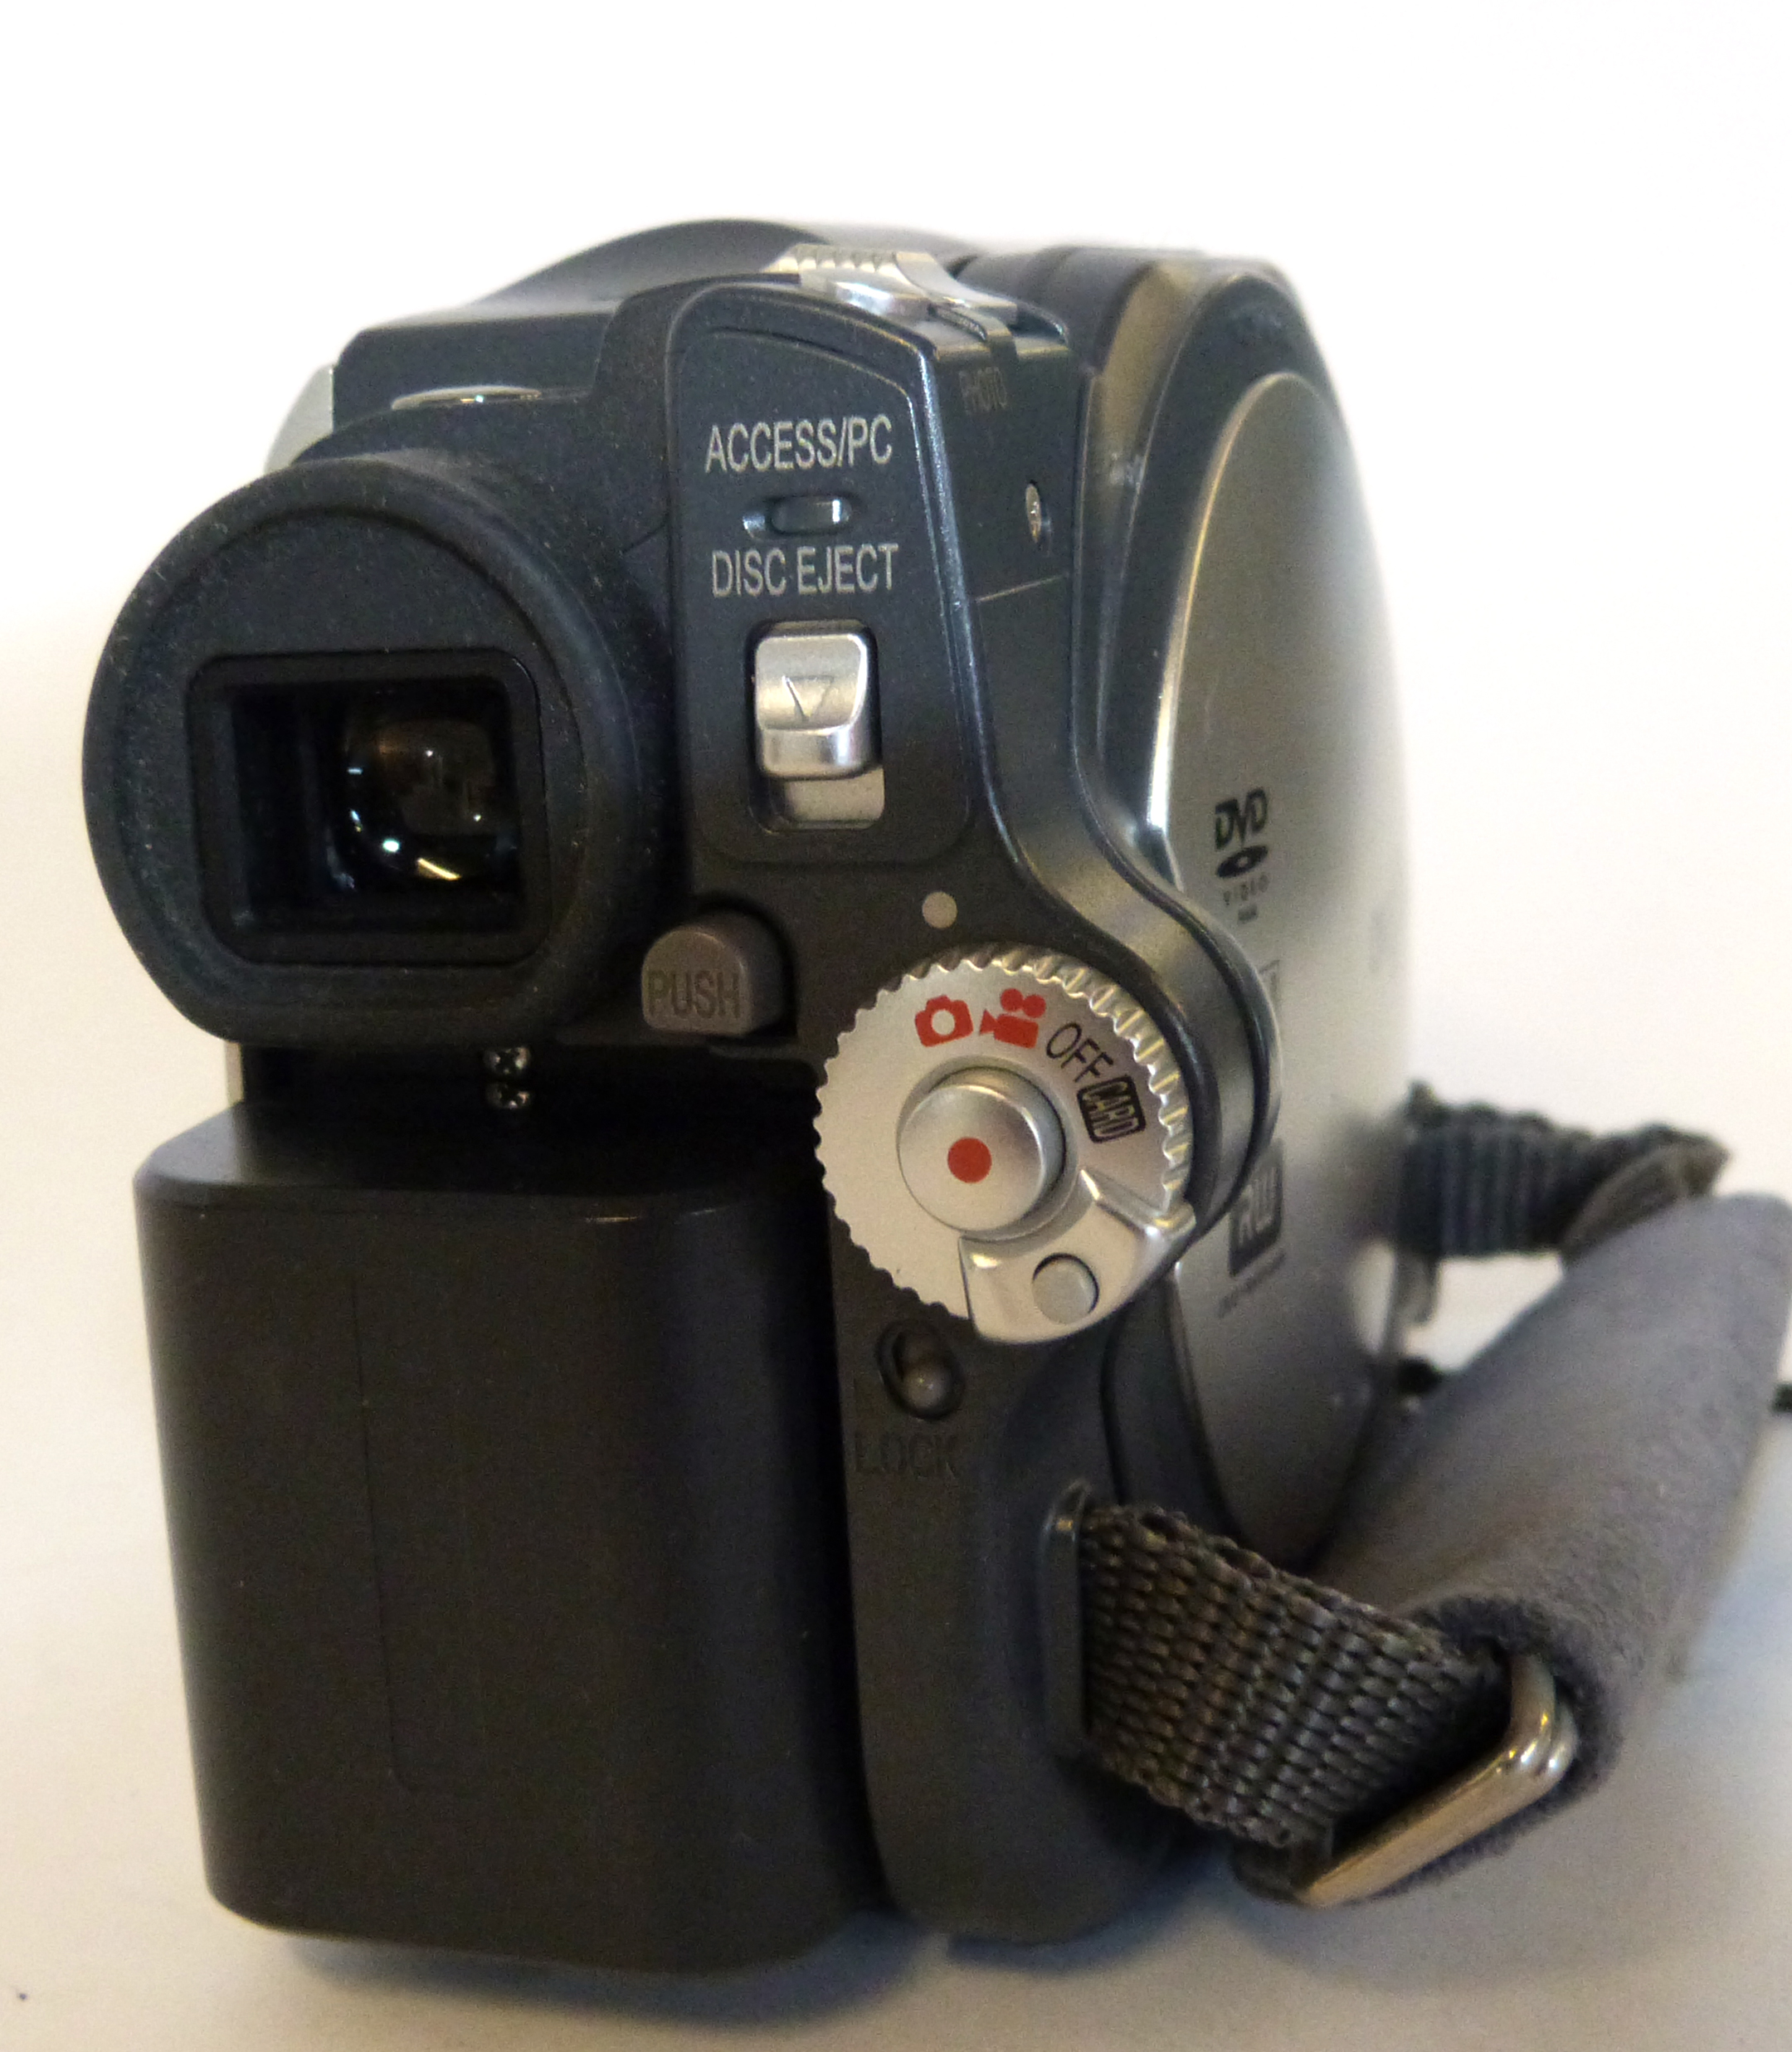 Hitachi D2-BX37E video camera with original box plus accessories - Image 5 of 8